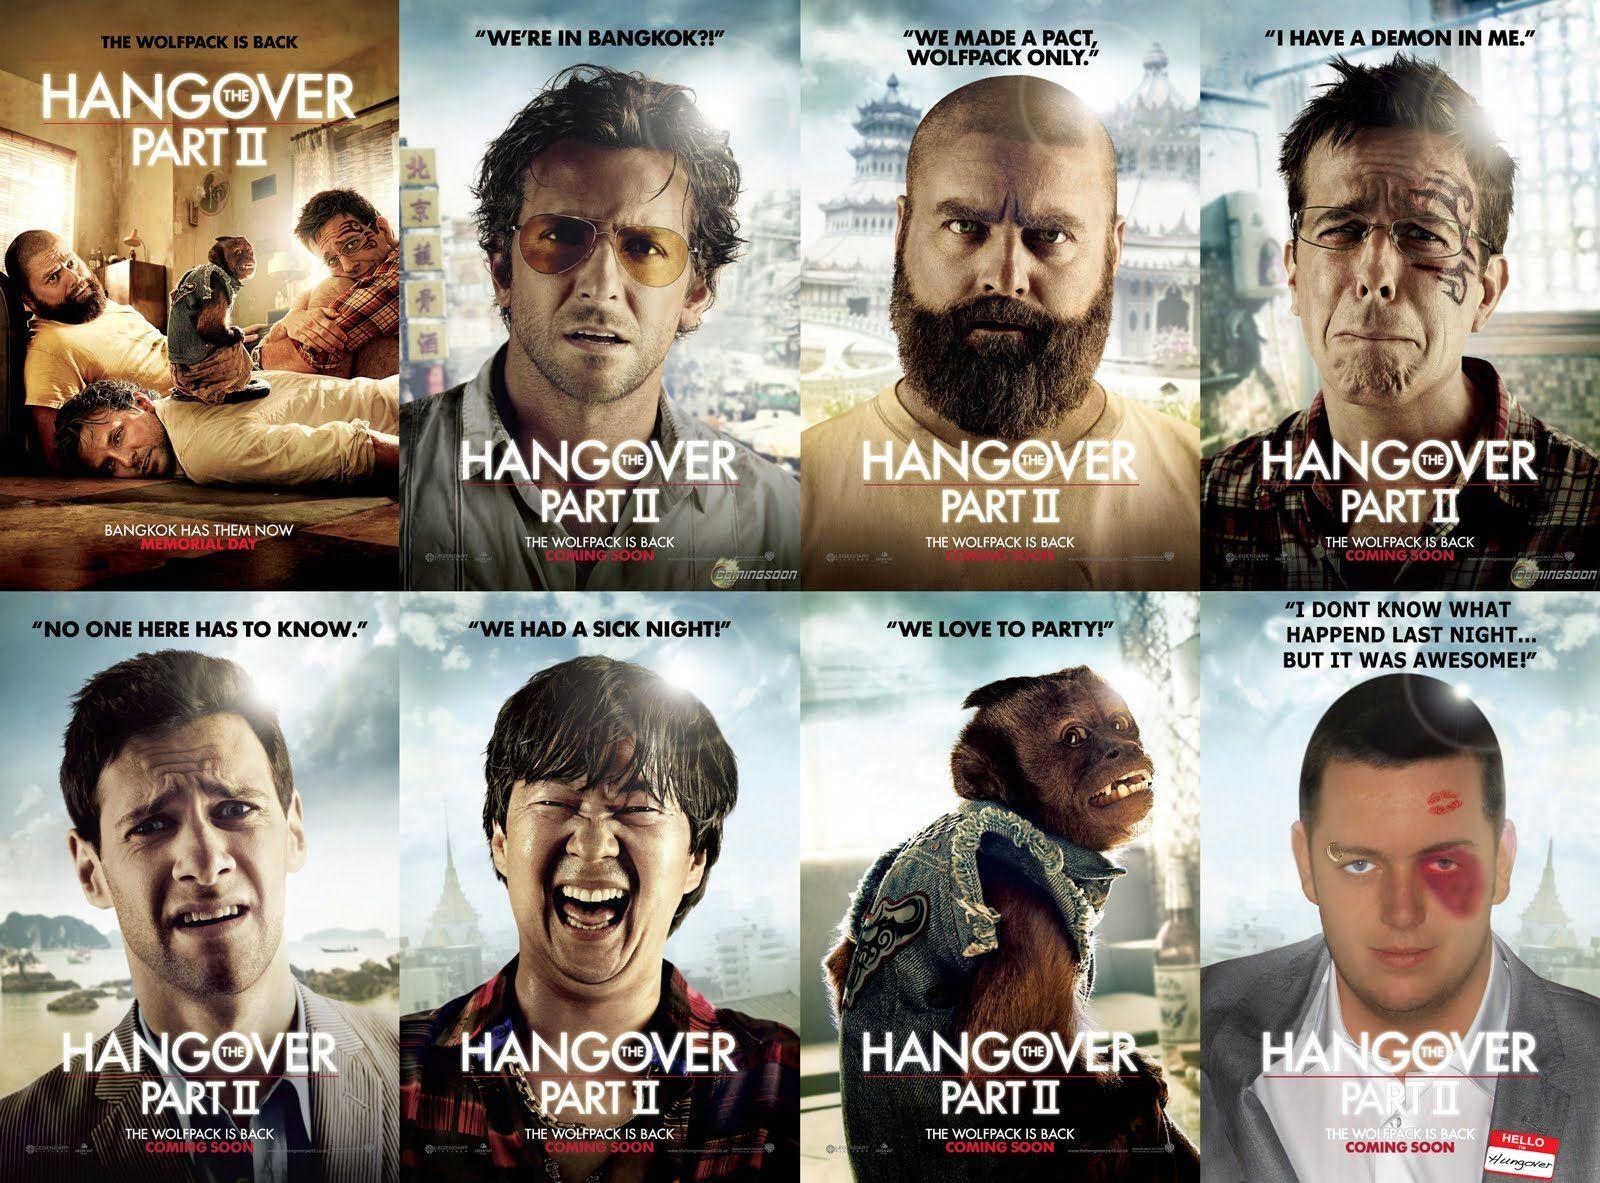 THE HANGOVER E HANGOVER PART III Stars Bradley Cooper. wallpaper